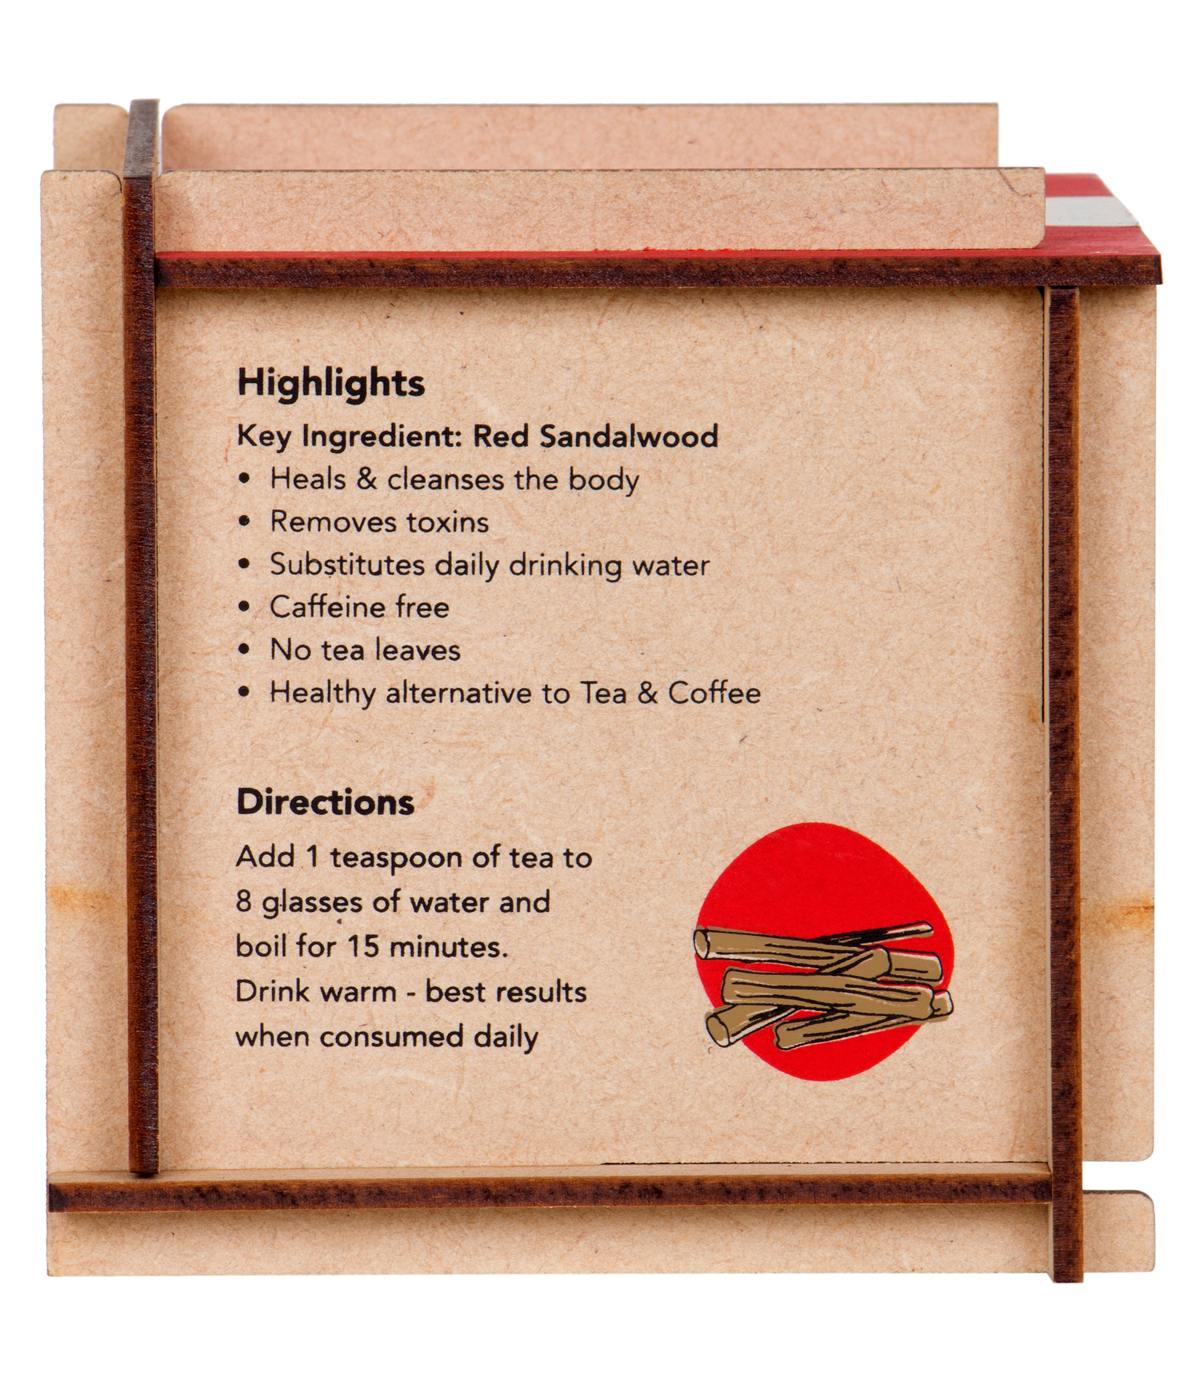 Buy Kairali Taahira tea (Taahira Herbal Infusion) at Best Price Online